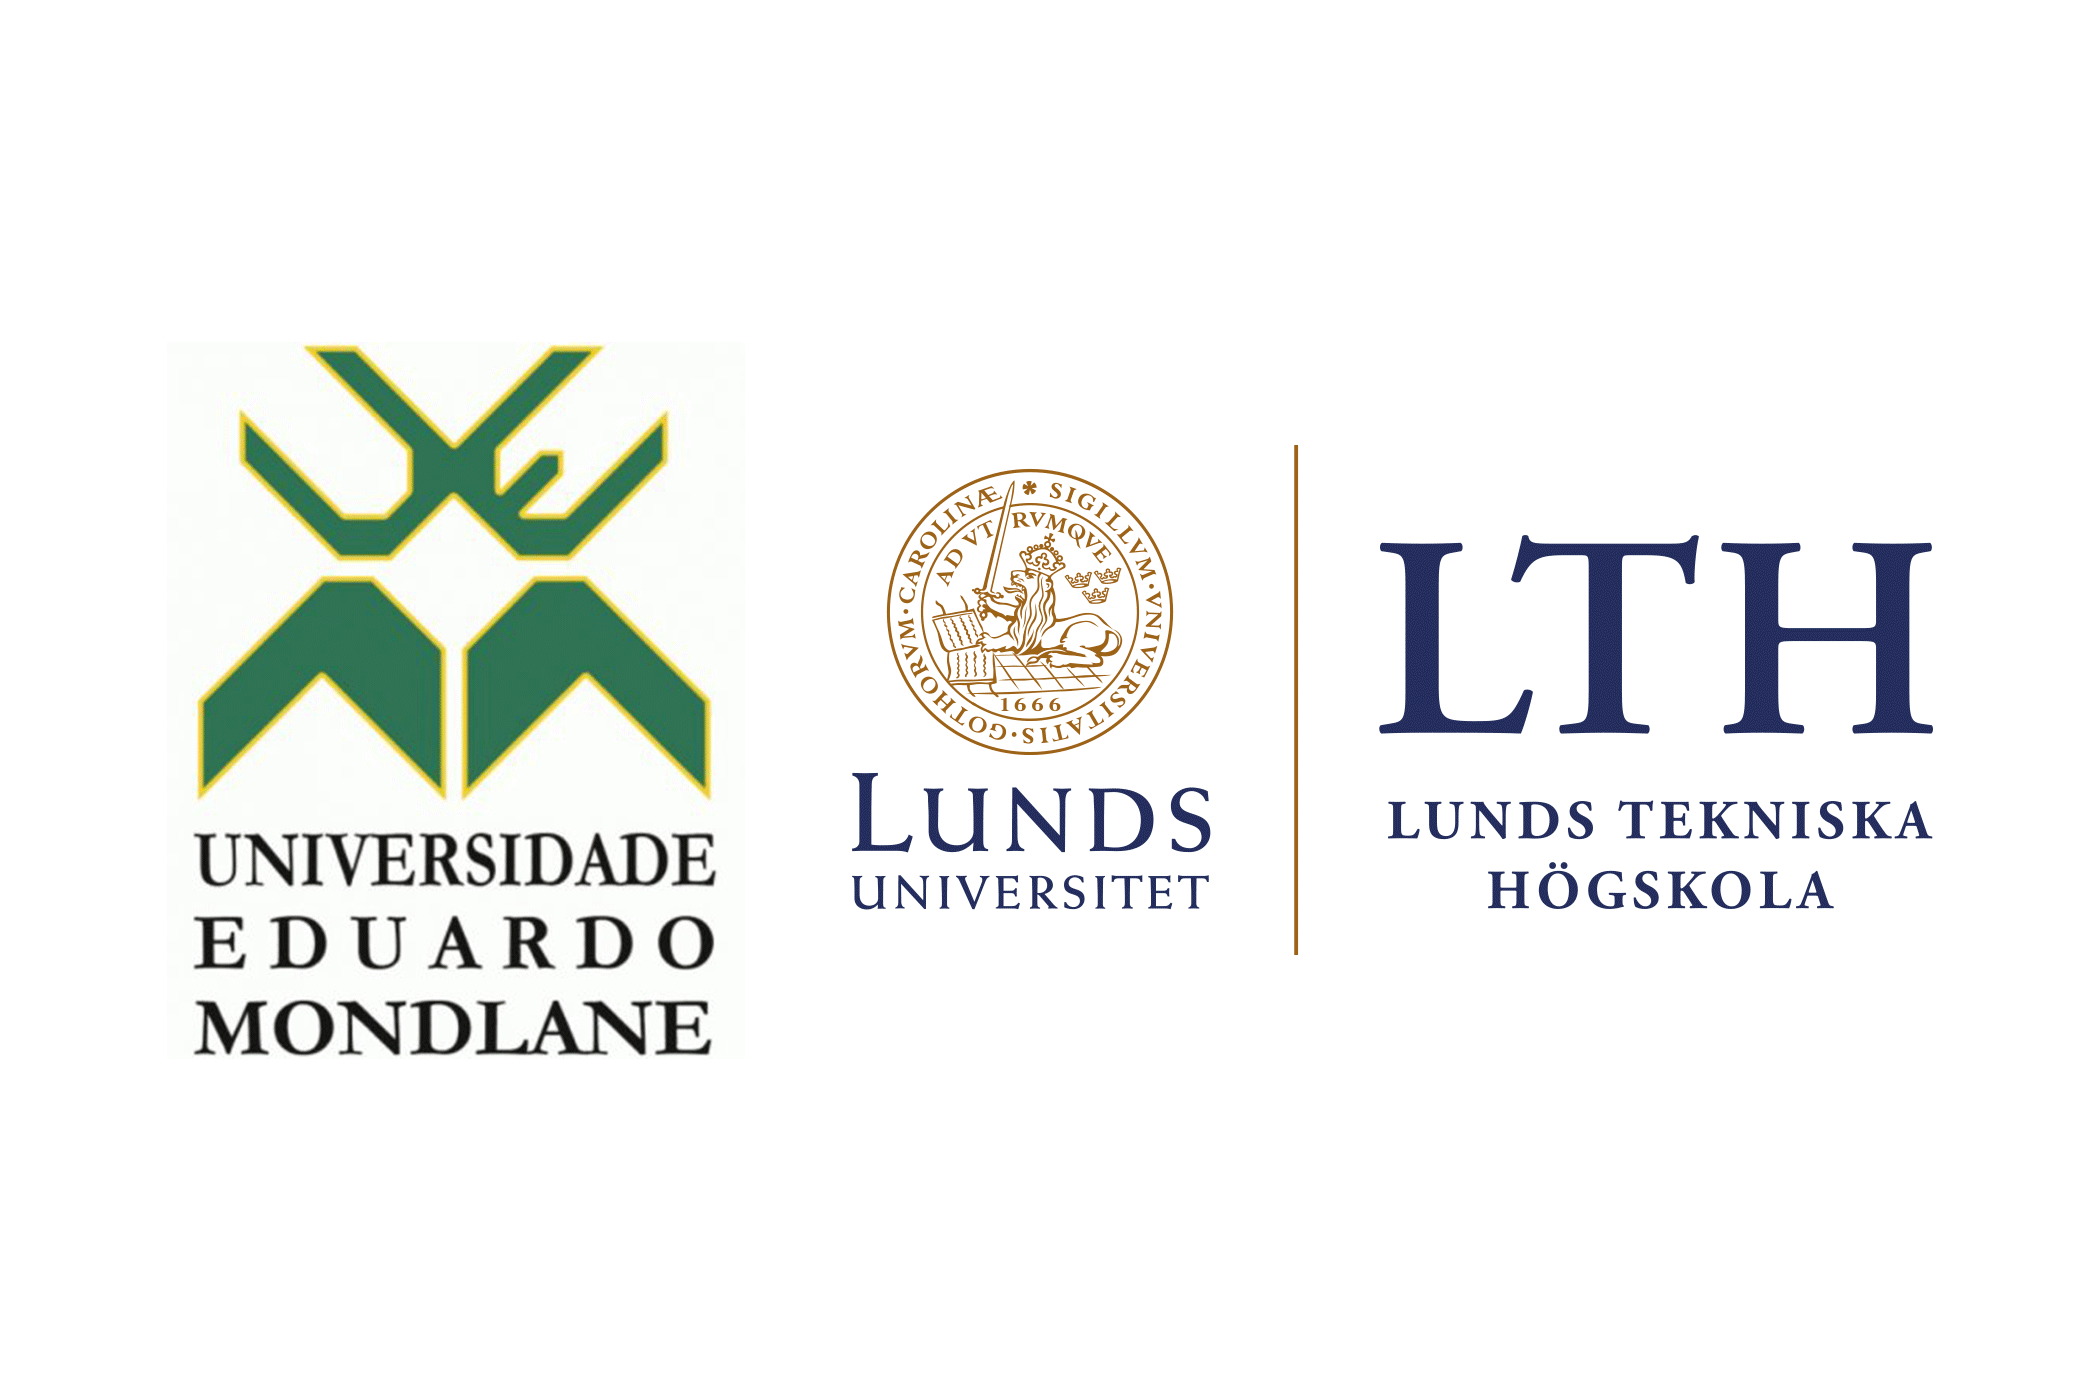 Universidade Eduardo Mondlane och LTH:s logotyper.